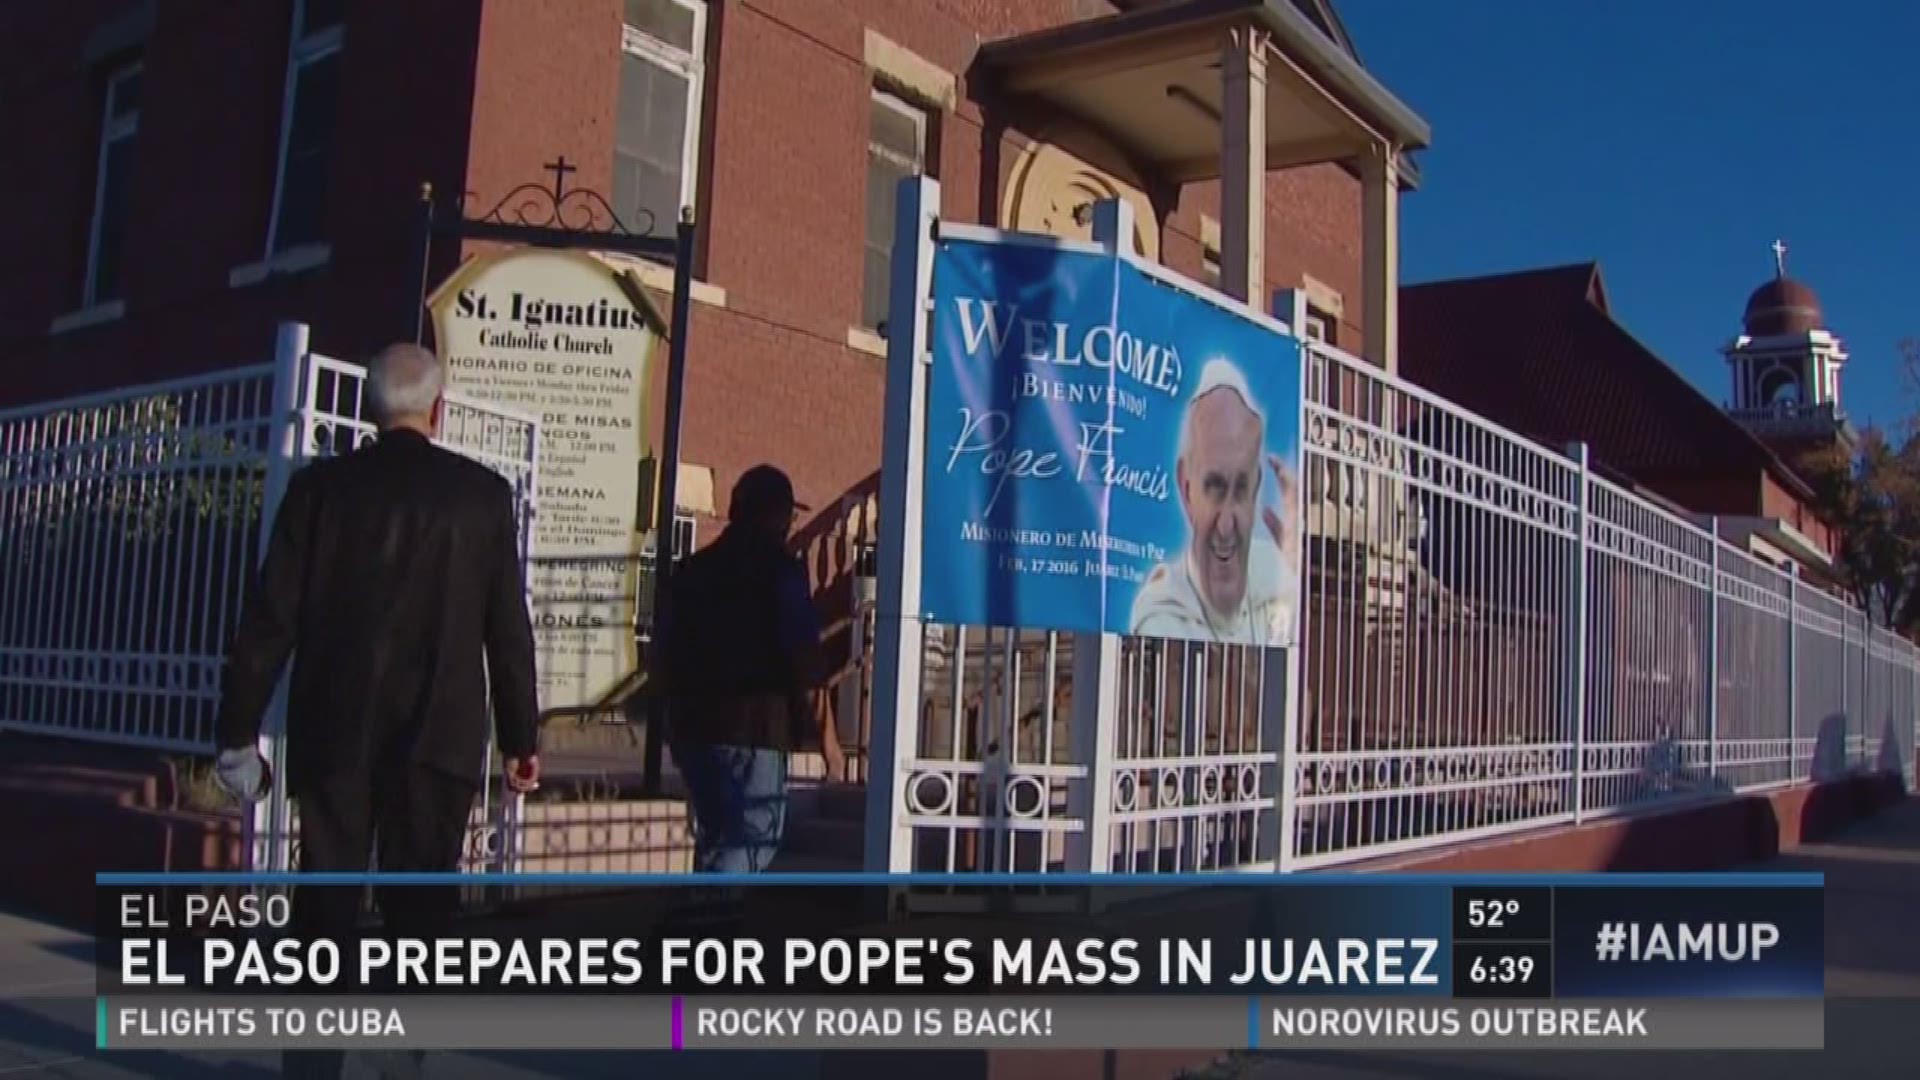 El Paso prepares for Pope's mass in Juarez